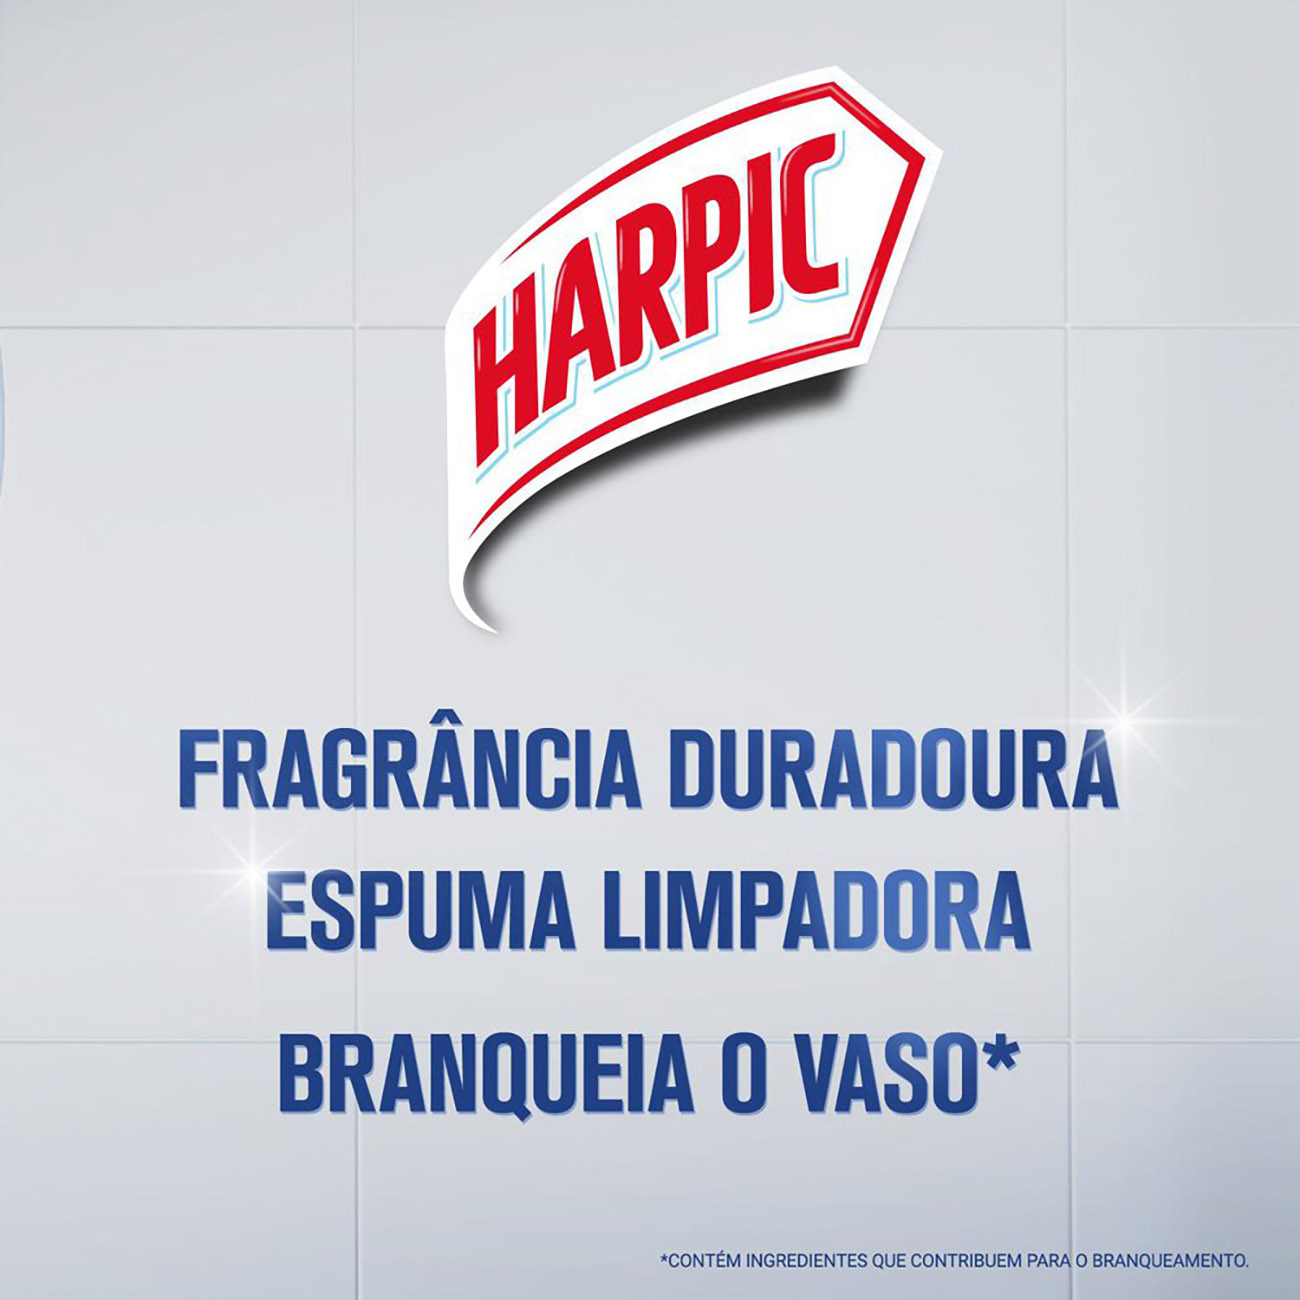 Bloco Sanitrio Harpic Fresh Power 6 com Cloro 35g